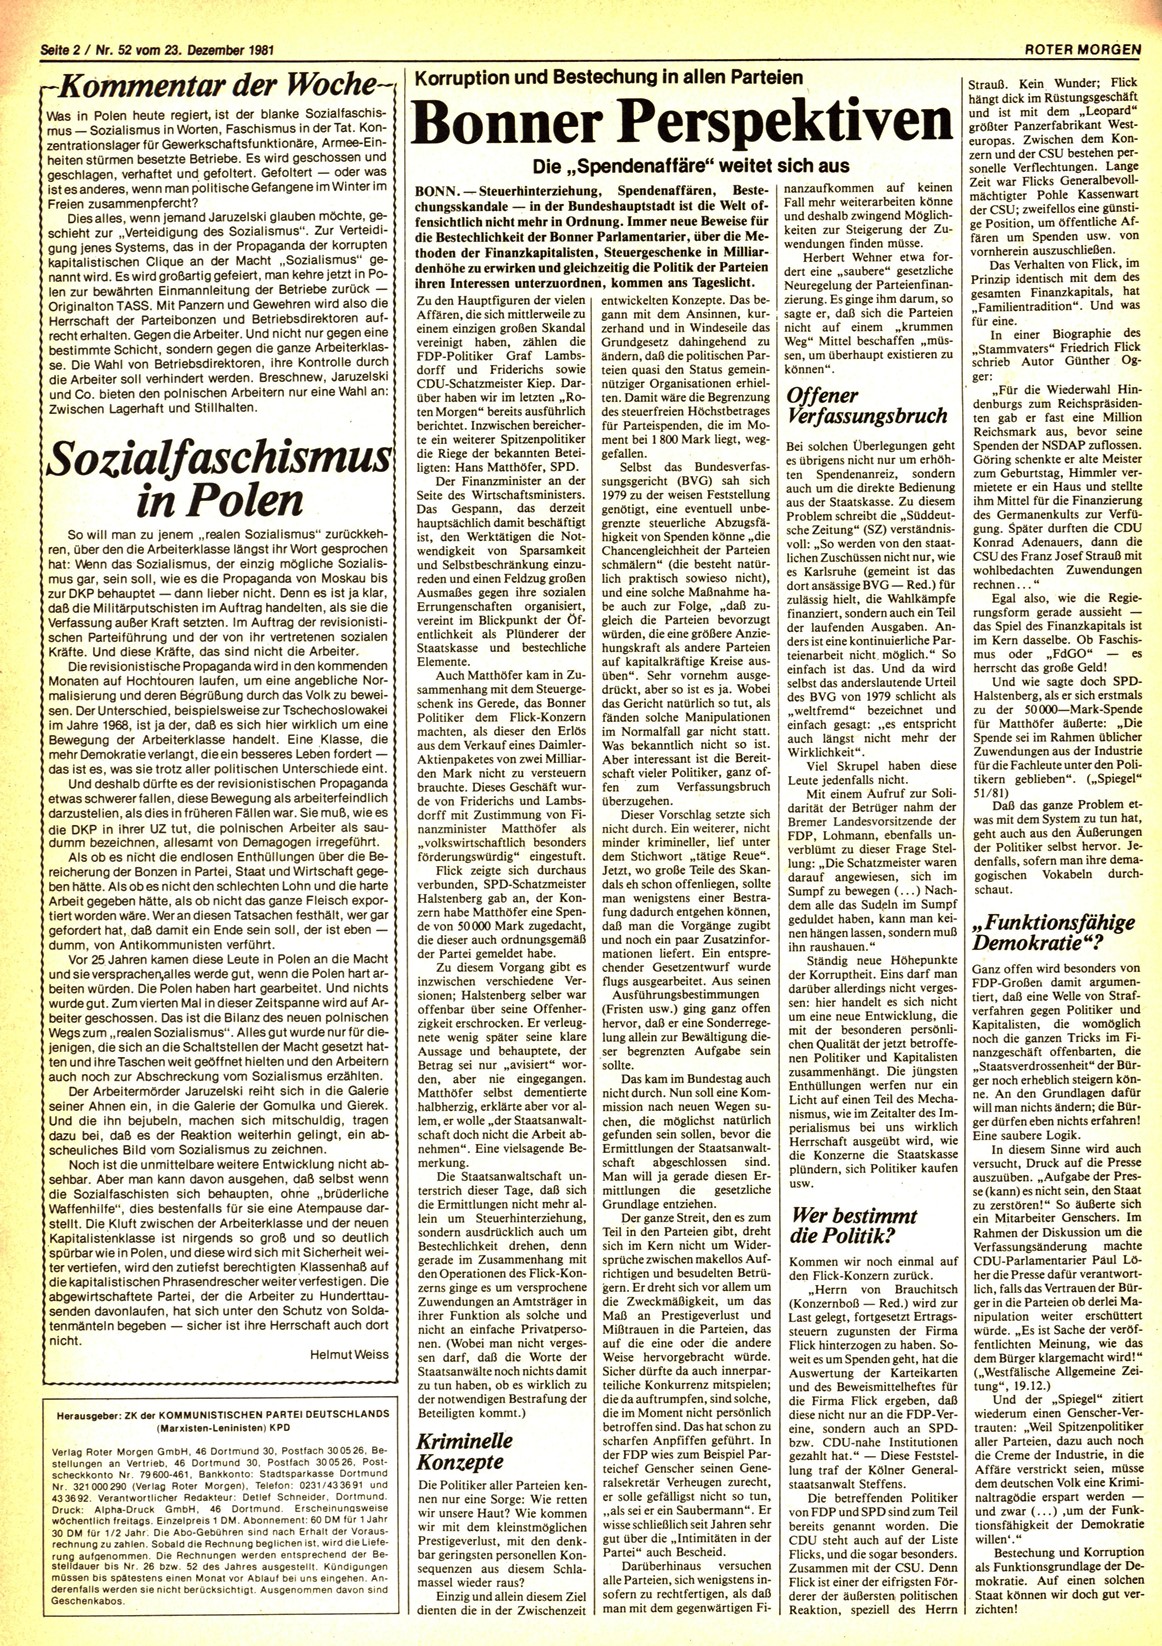 Roter Morgen, 15. Jg., 23. Dezember 1981, Nr. 52, Seite 2